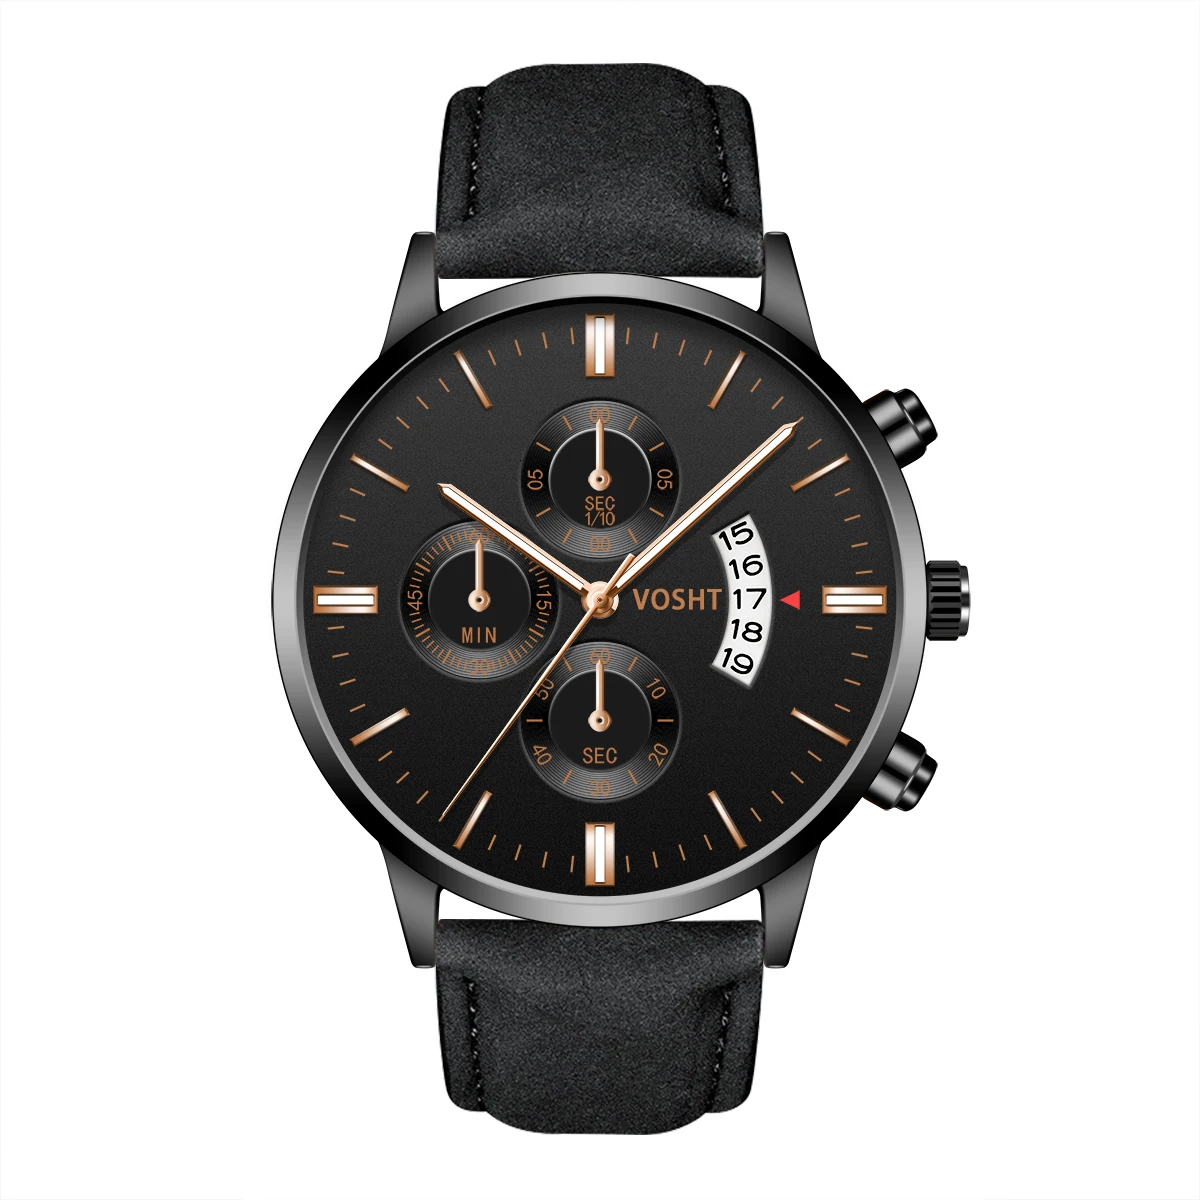 

2019 Watch Men Fashion Casual Watch Leather Band With Calendar Quartz Wristwatch Male Man Luxury Date Watches erkek kol saati